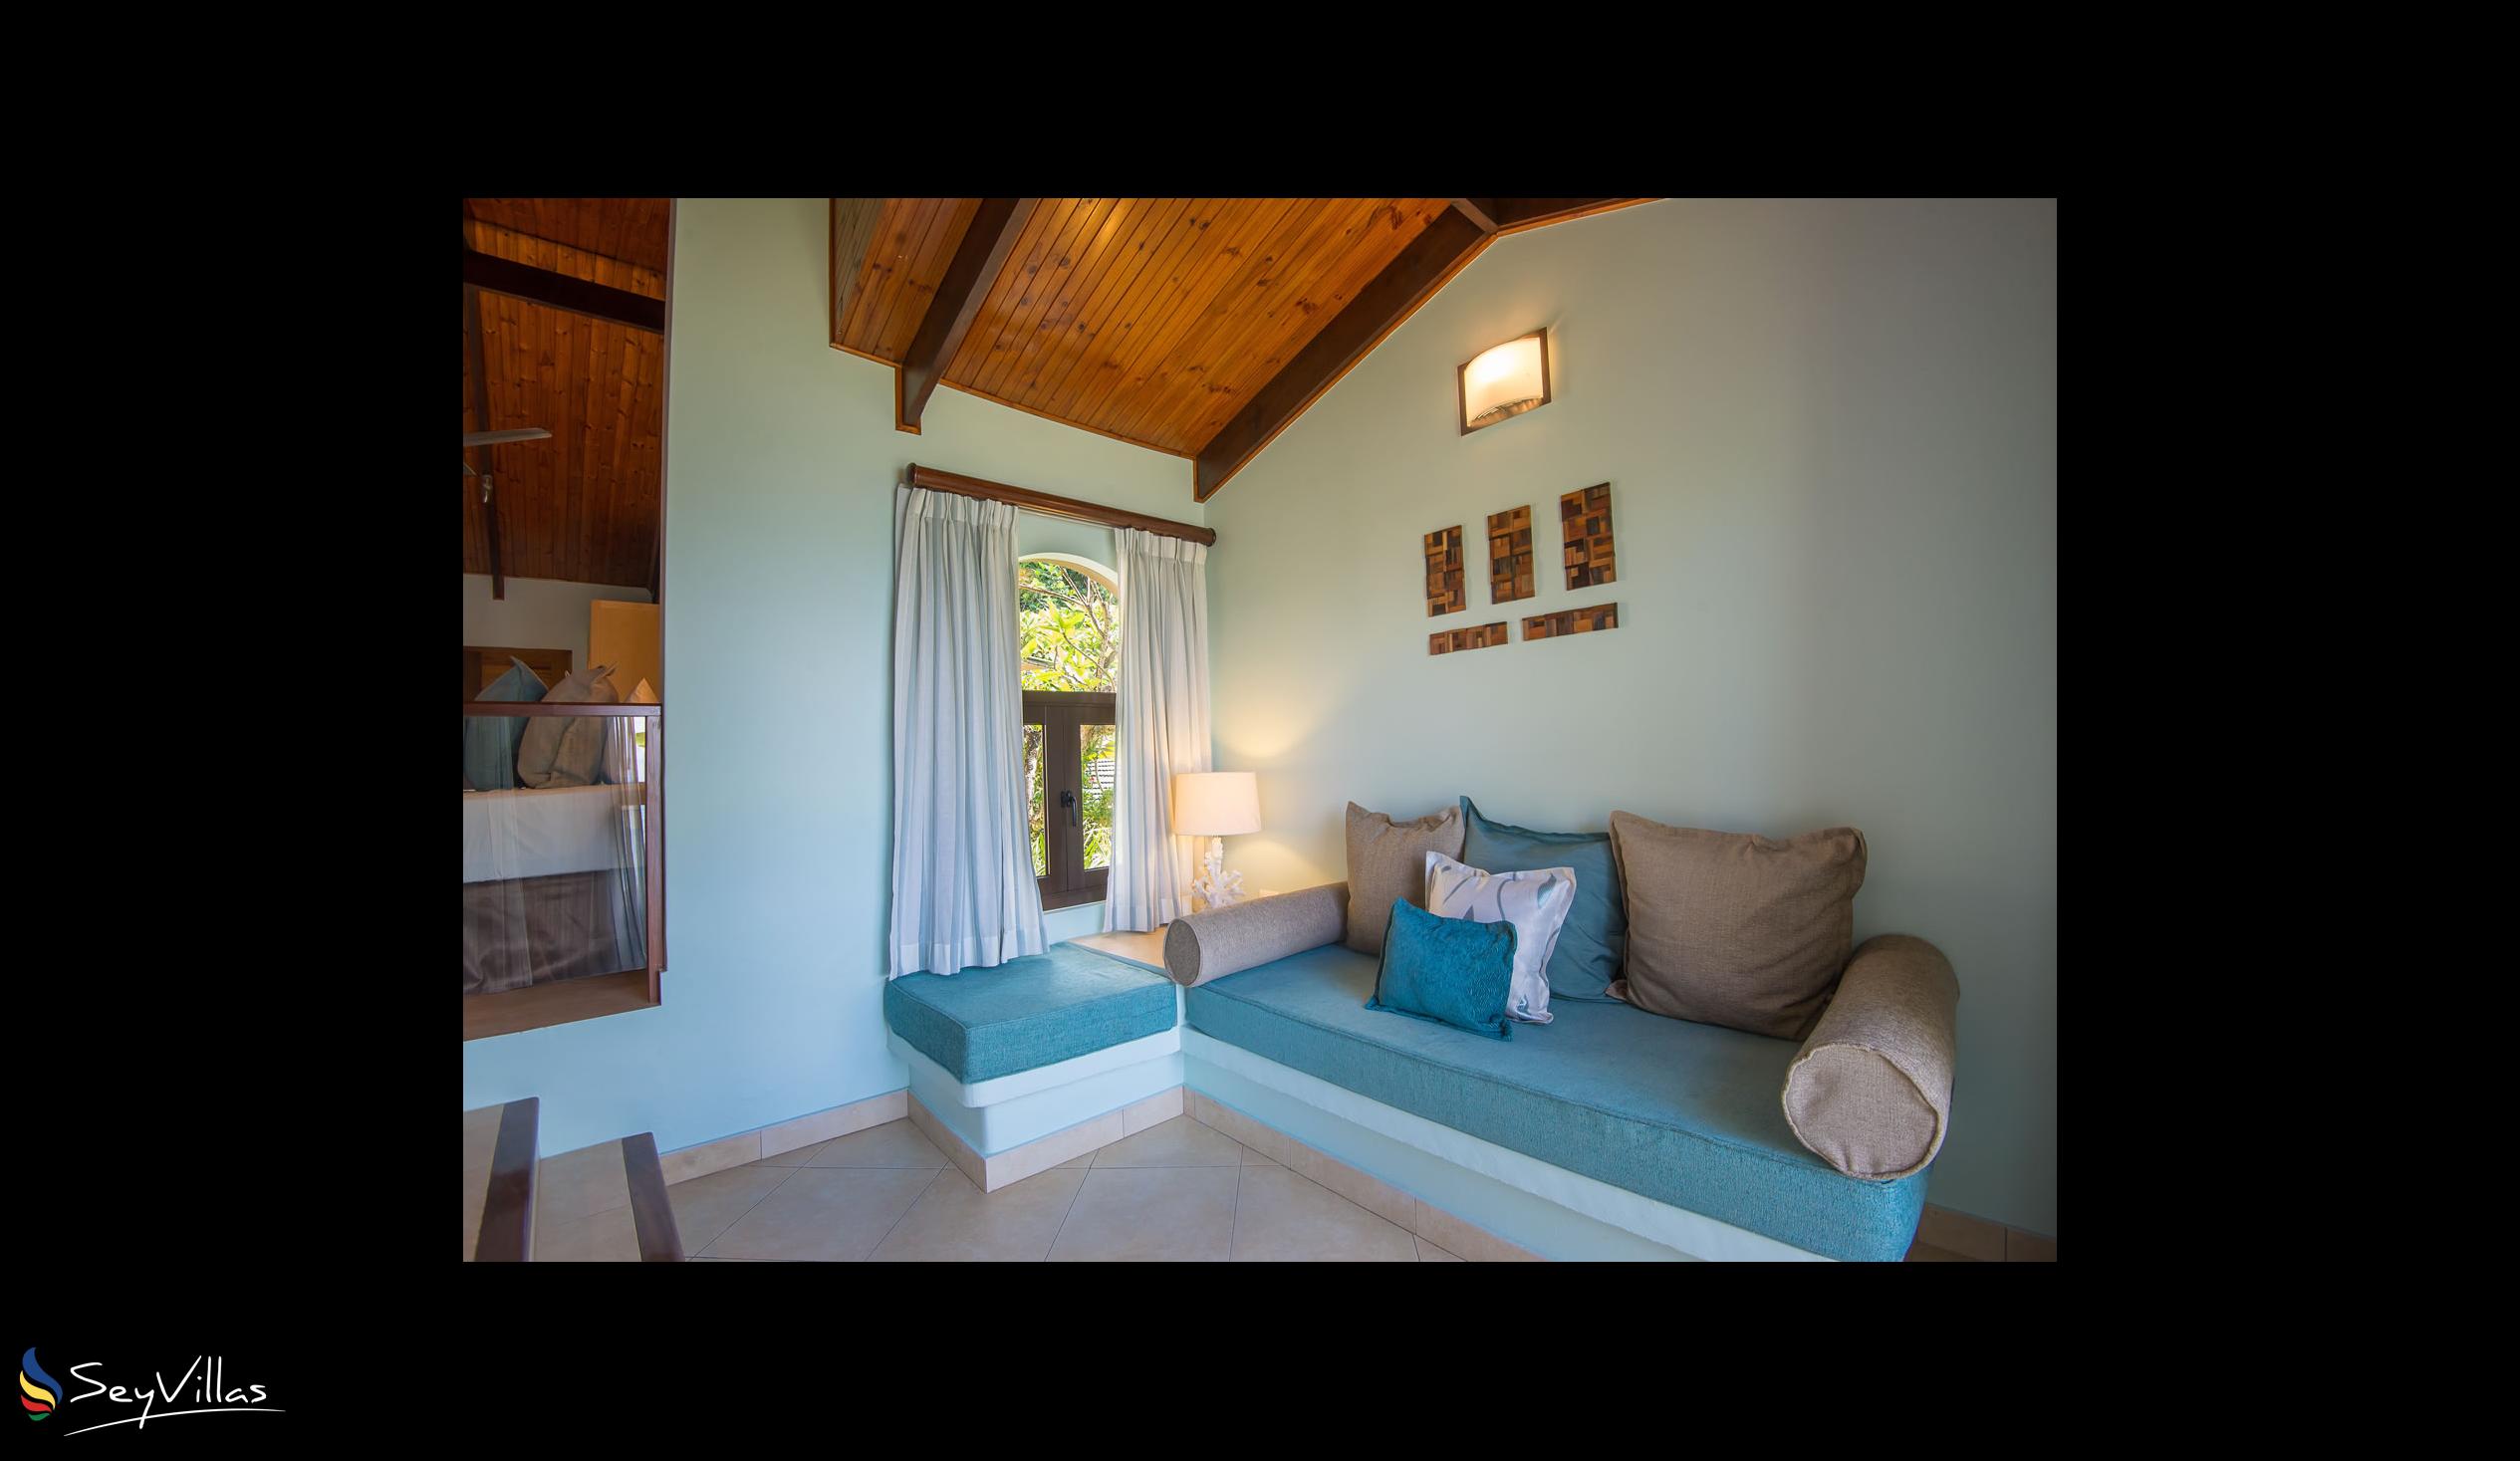 Photo 58: Coco de Mer & Black Parrot Suites - Standard - Praslin (Seychelles)